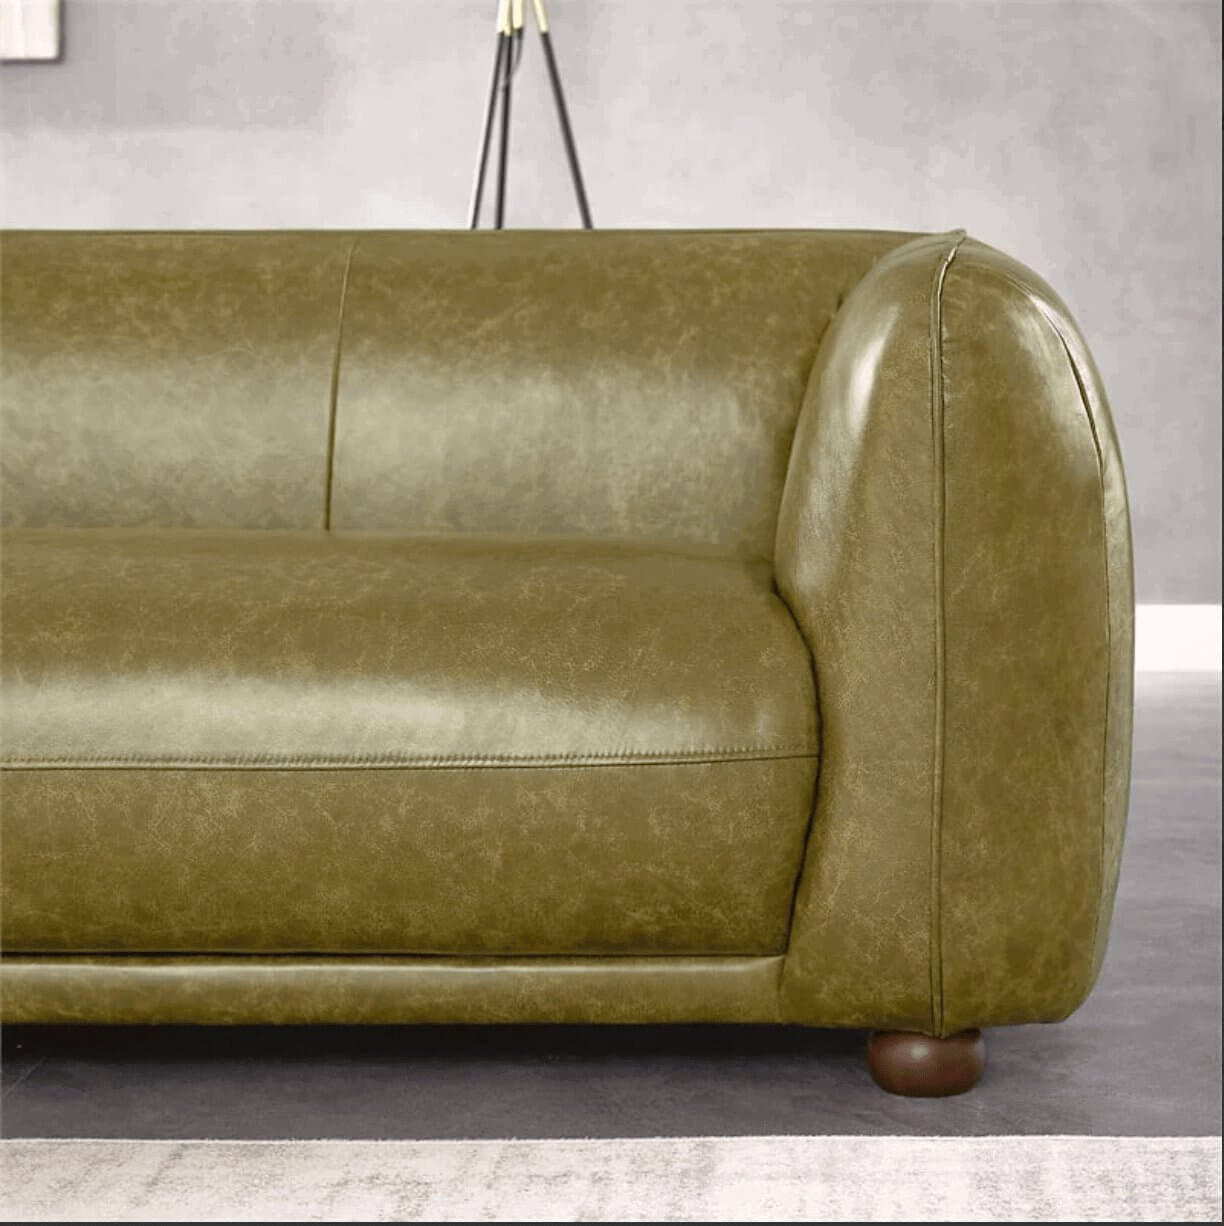 Marlon Modern Genuine Italian Leather Sofa Couch 87” - Revel Sofa 